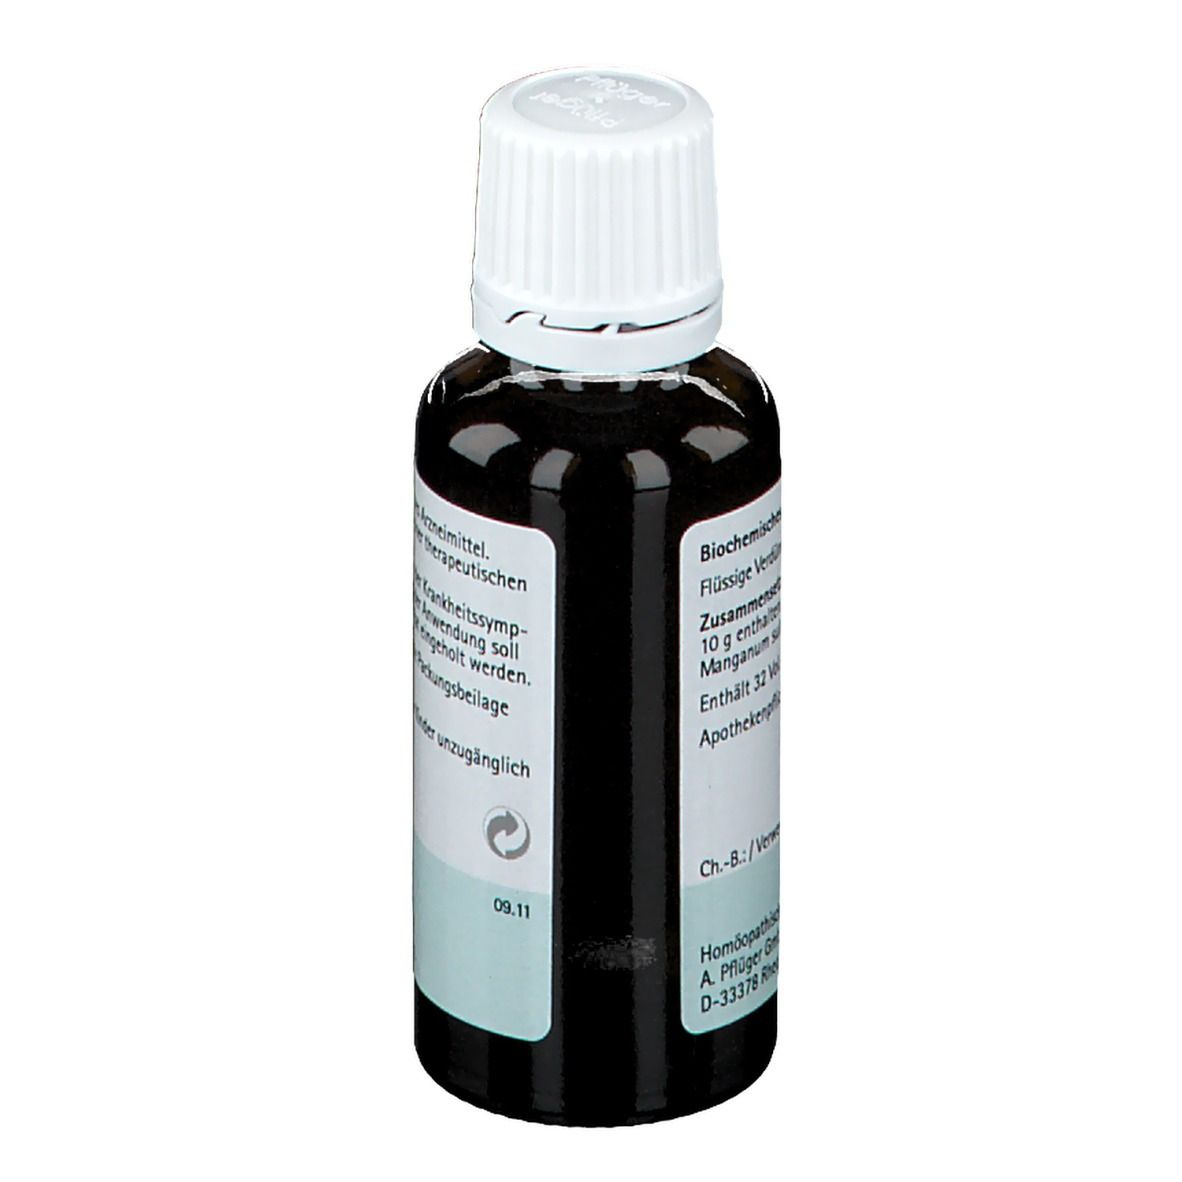 Biochemie Pflüger® Nr. 17 Manganum sulfuricum D6 Tropfen